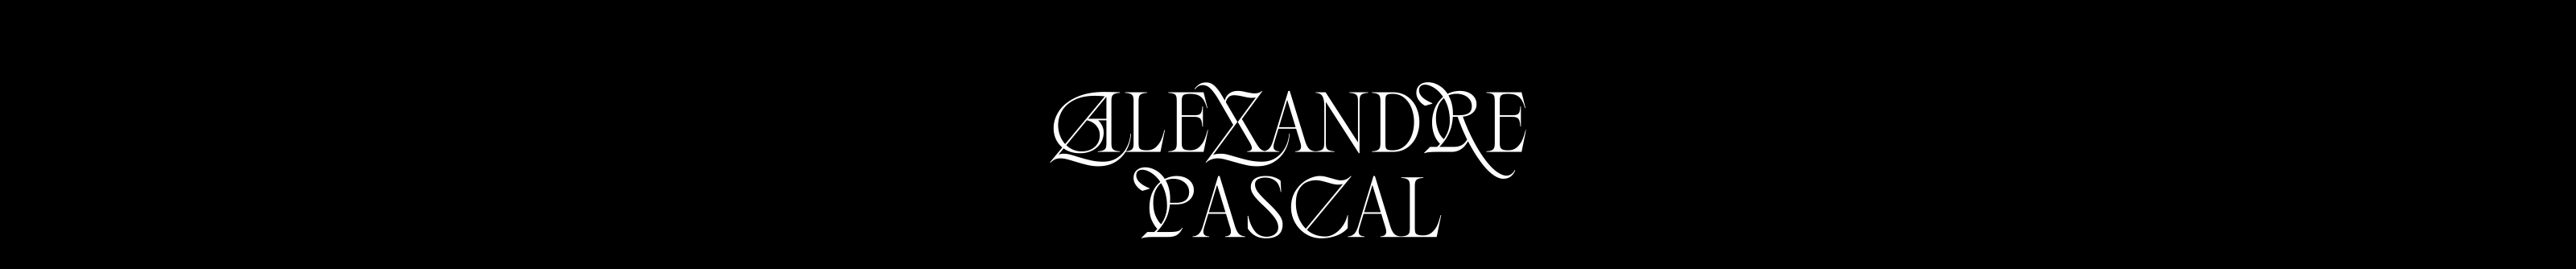 Alexandre Pascal's profile banner